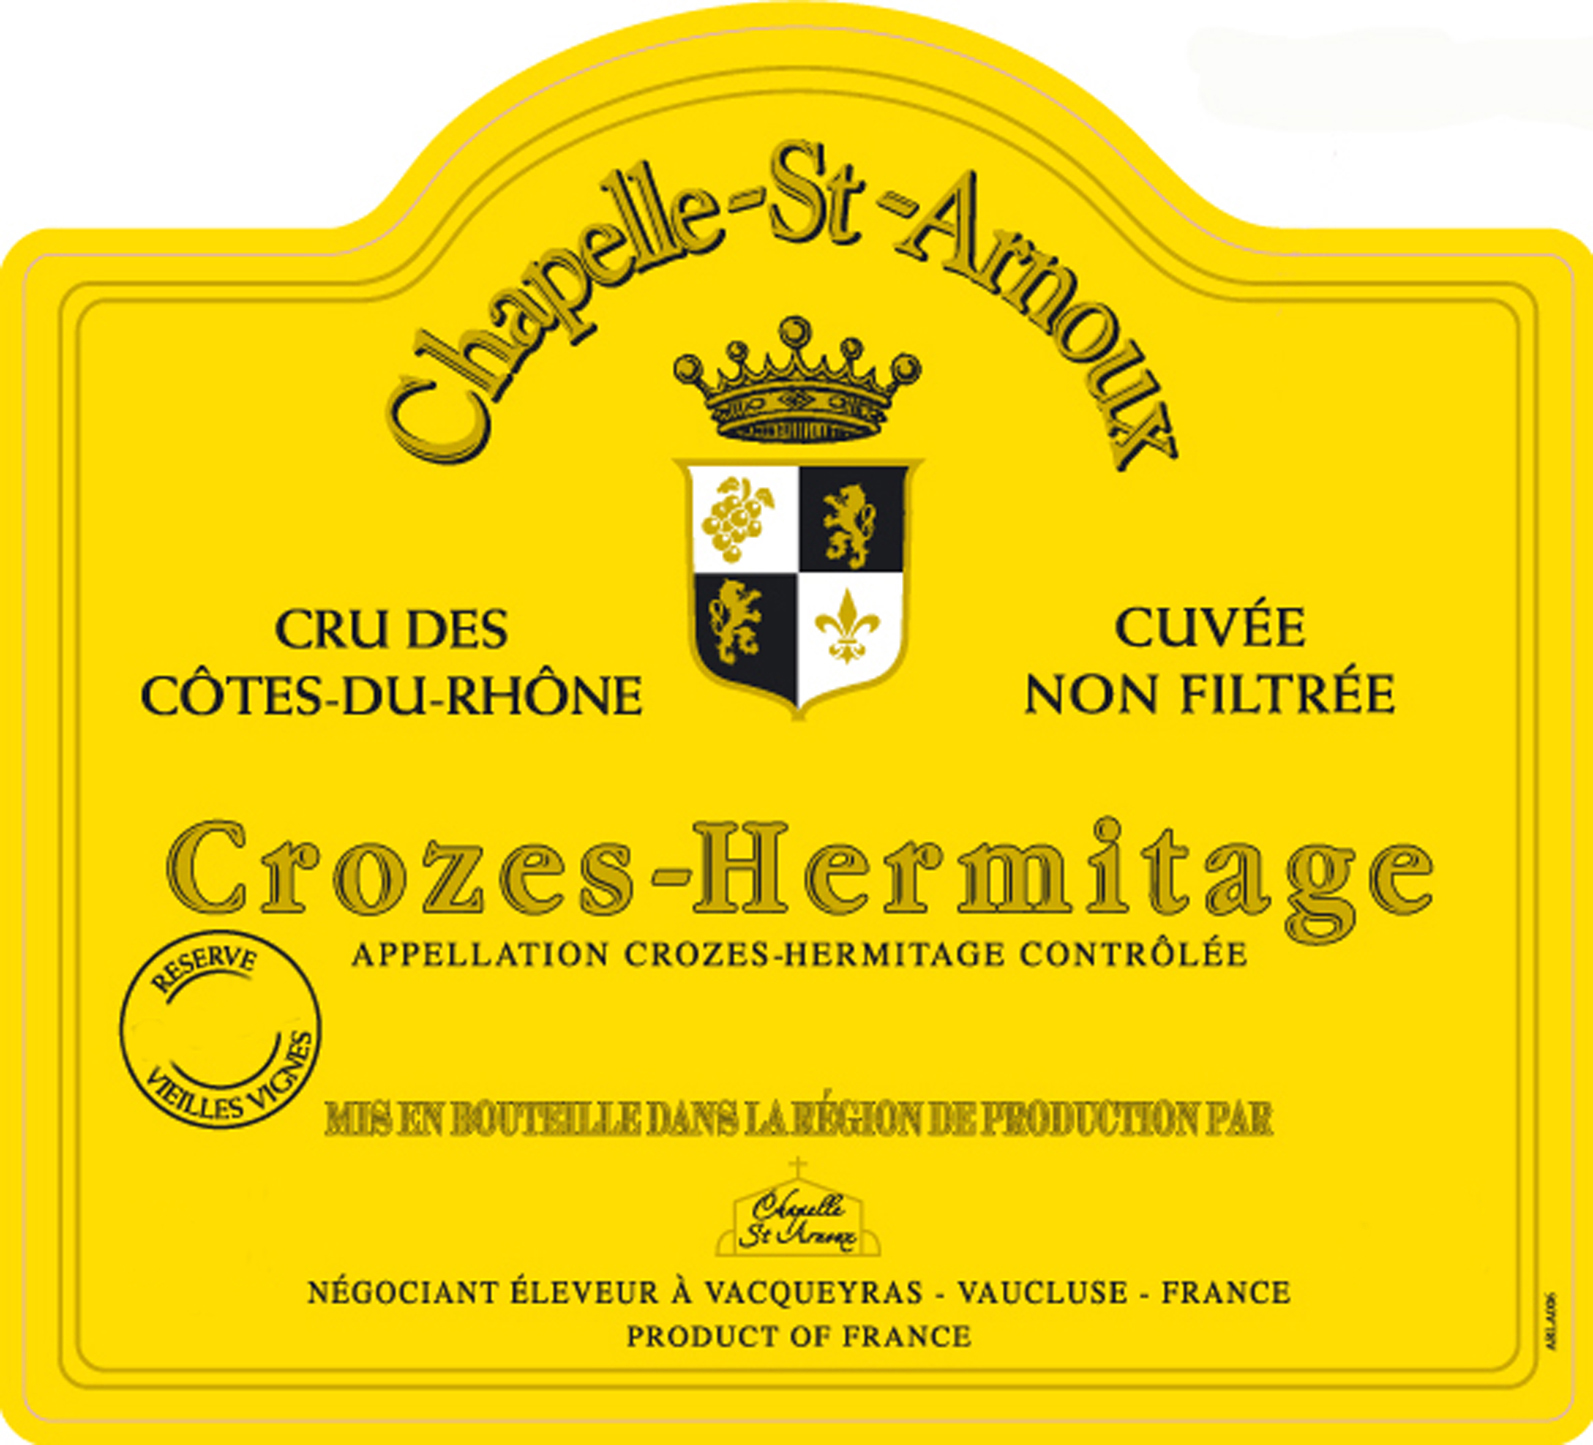 Chapelle-St-Arnoux - Crozes-Hermitage label